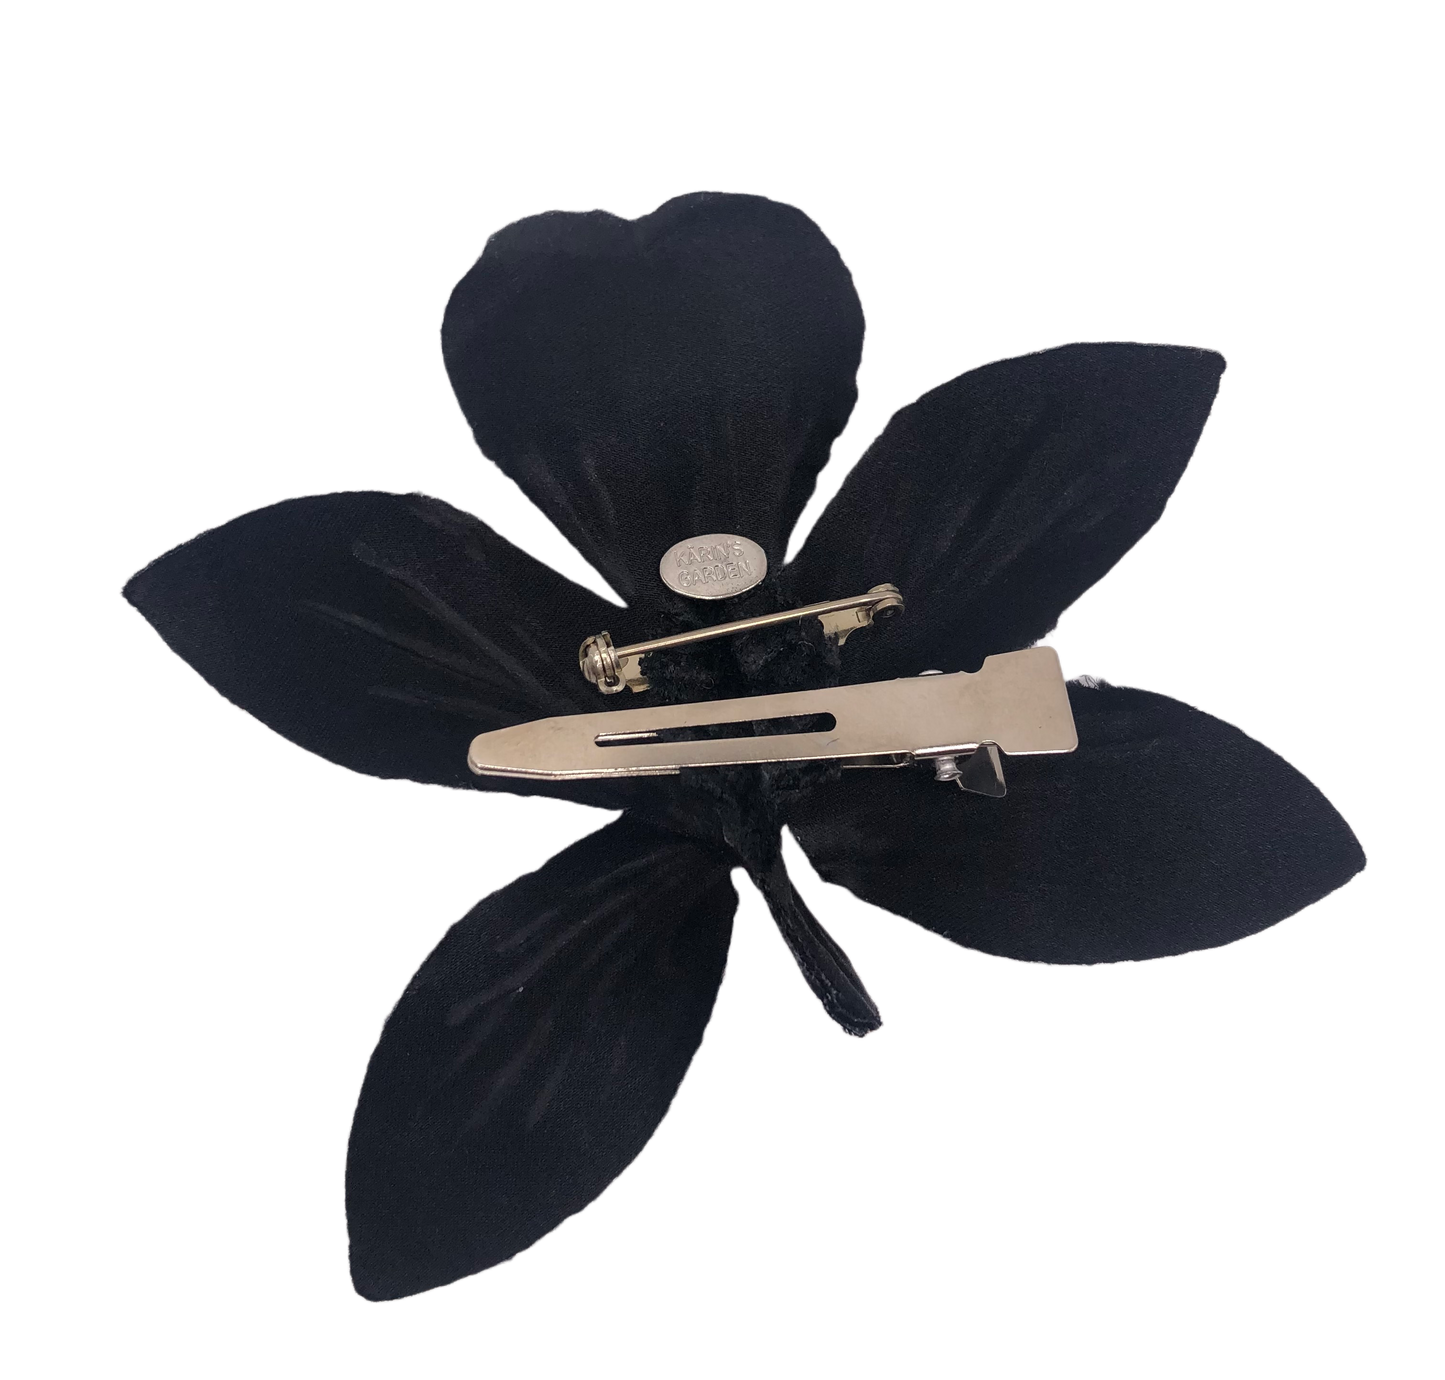 Karin’s Garden 3” Black Crushed Velvet Orchid Pin-Clip Duo